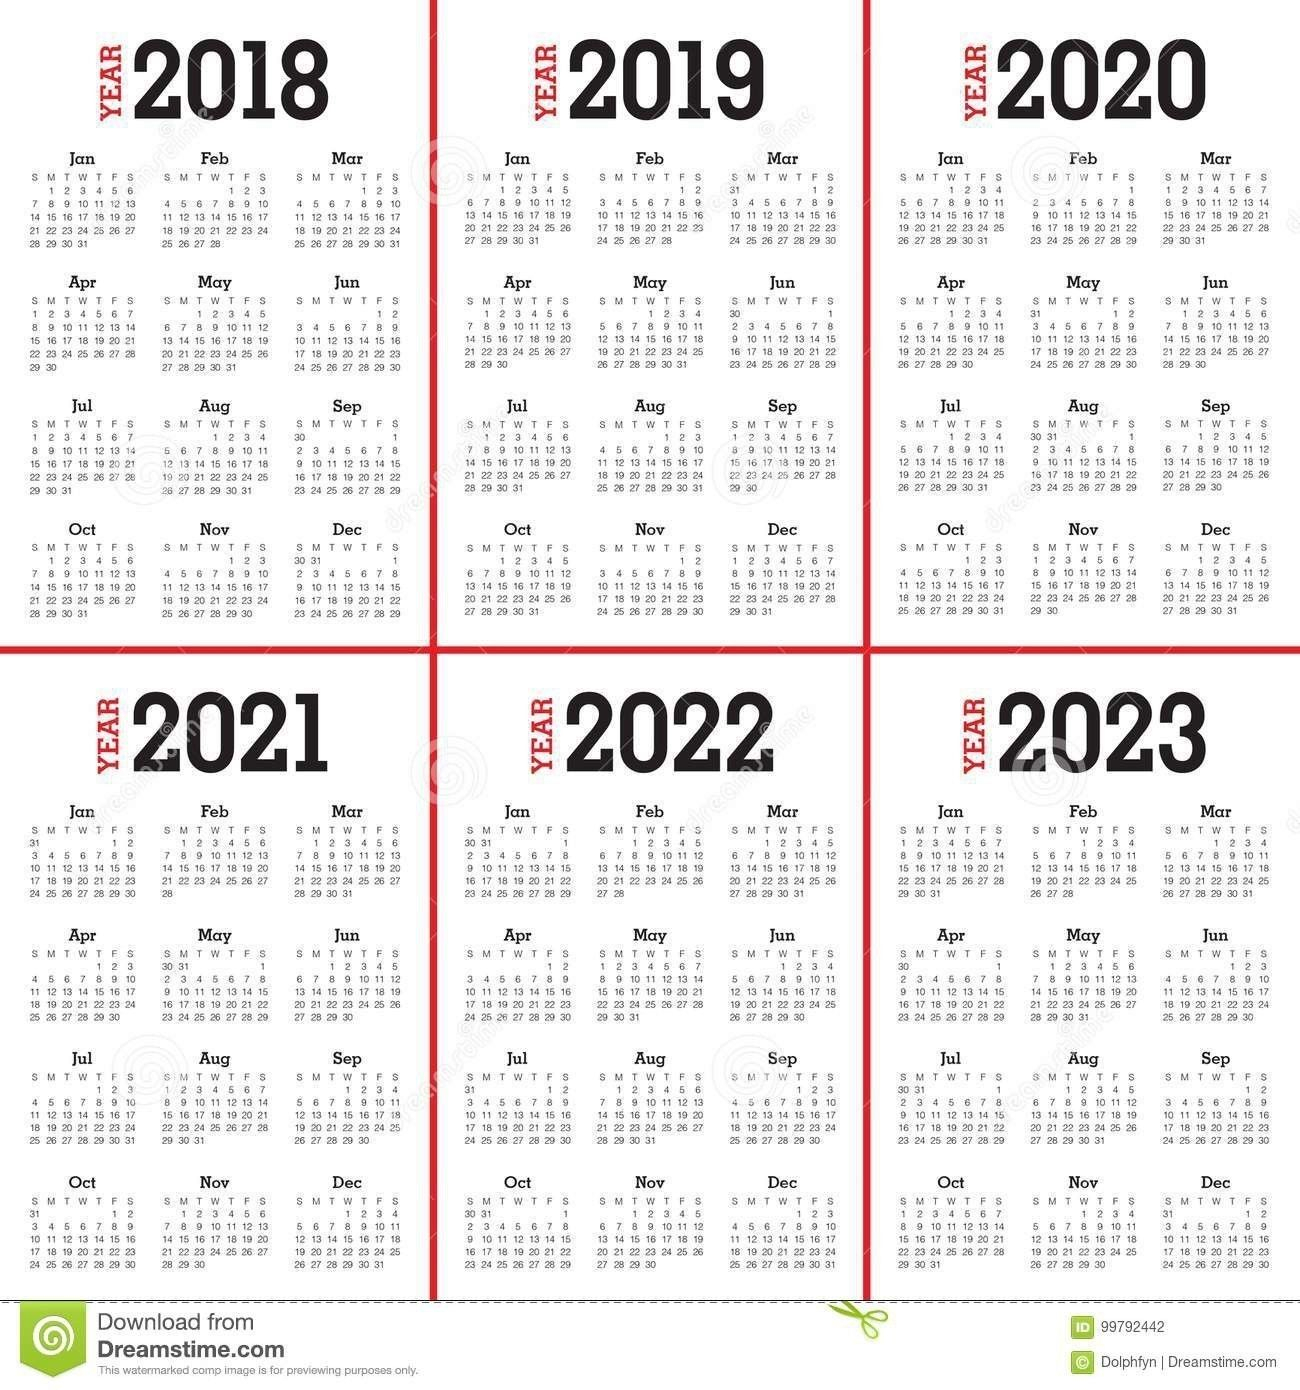 3 Year Calendar 2021 To 2023 In 2020 | Calendar Template